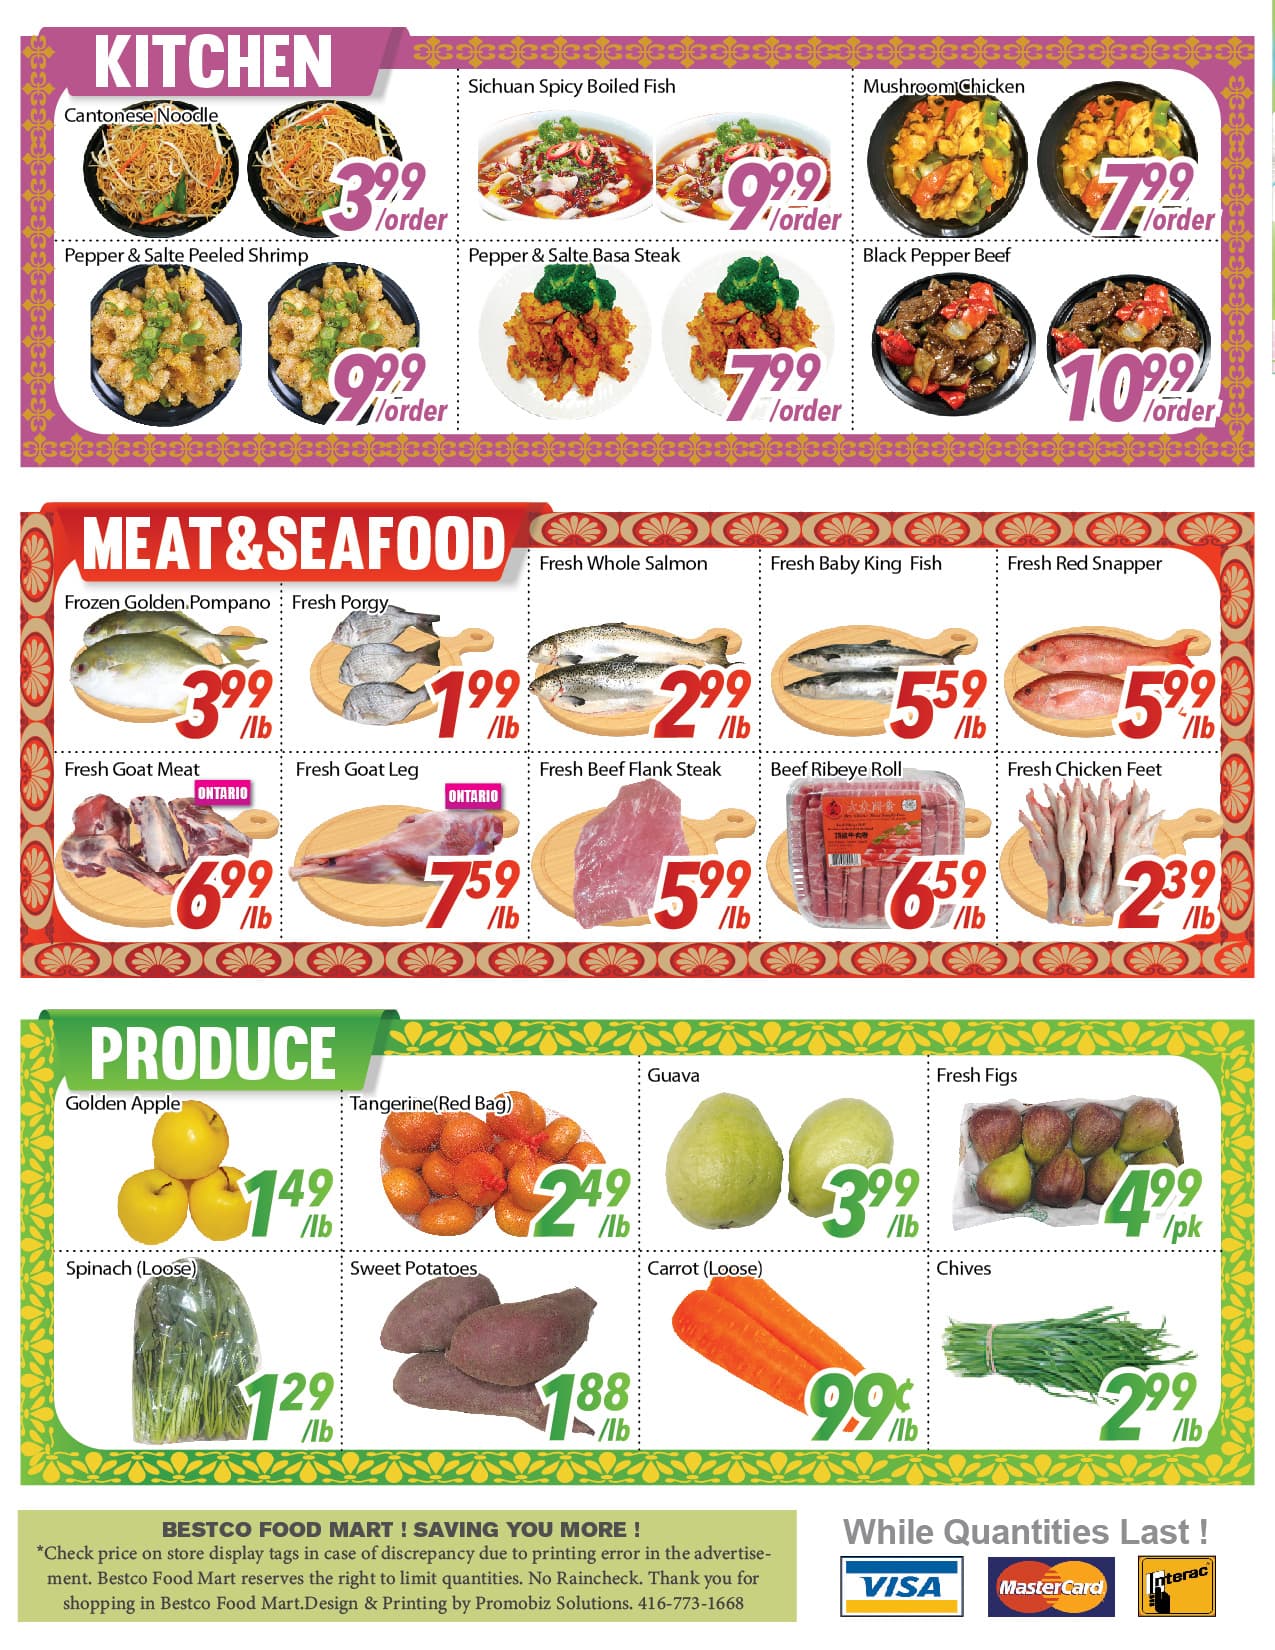 Bestco Food Mart - Etobicoke - Weekly Flyer Specials - Page 3